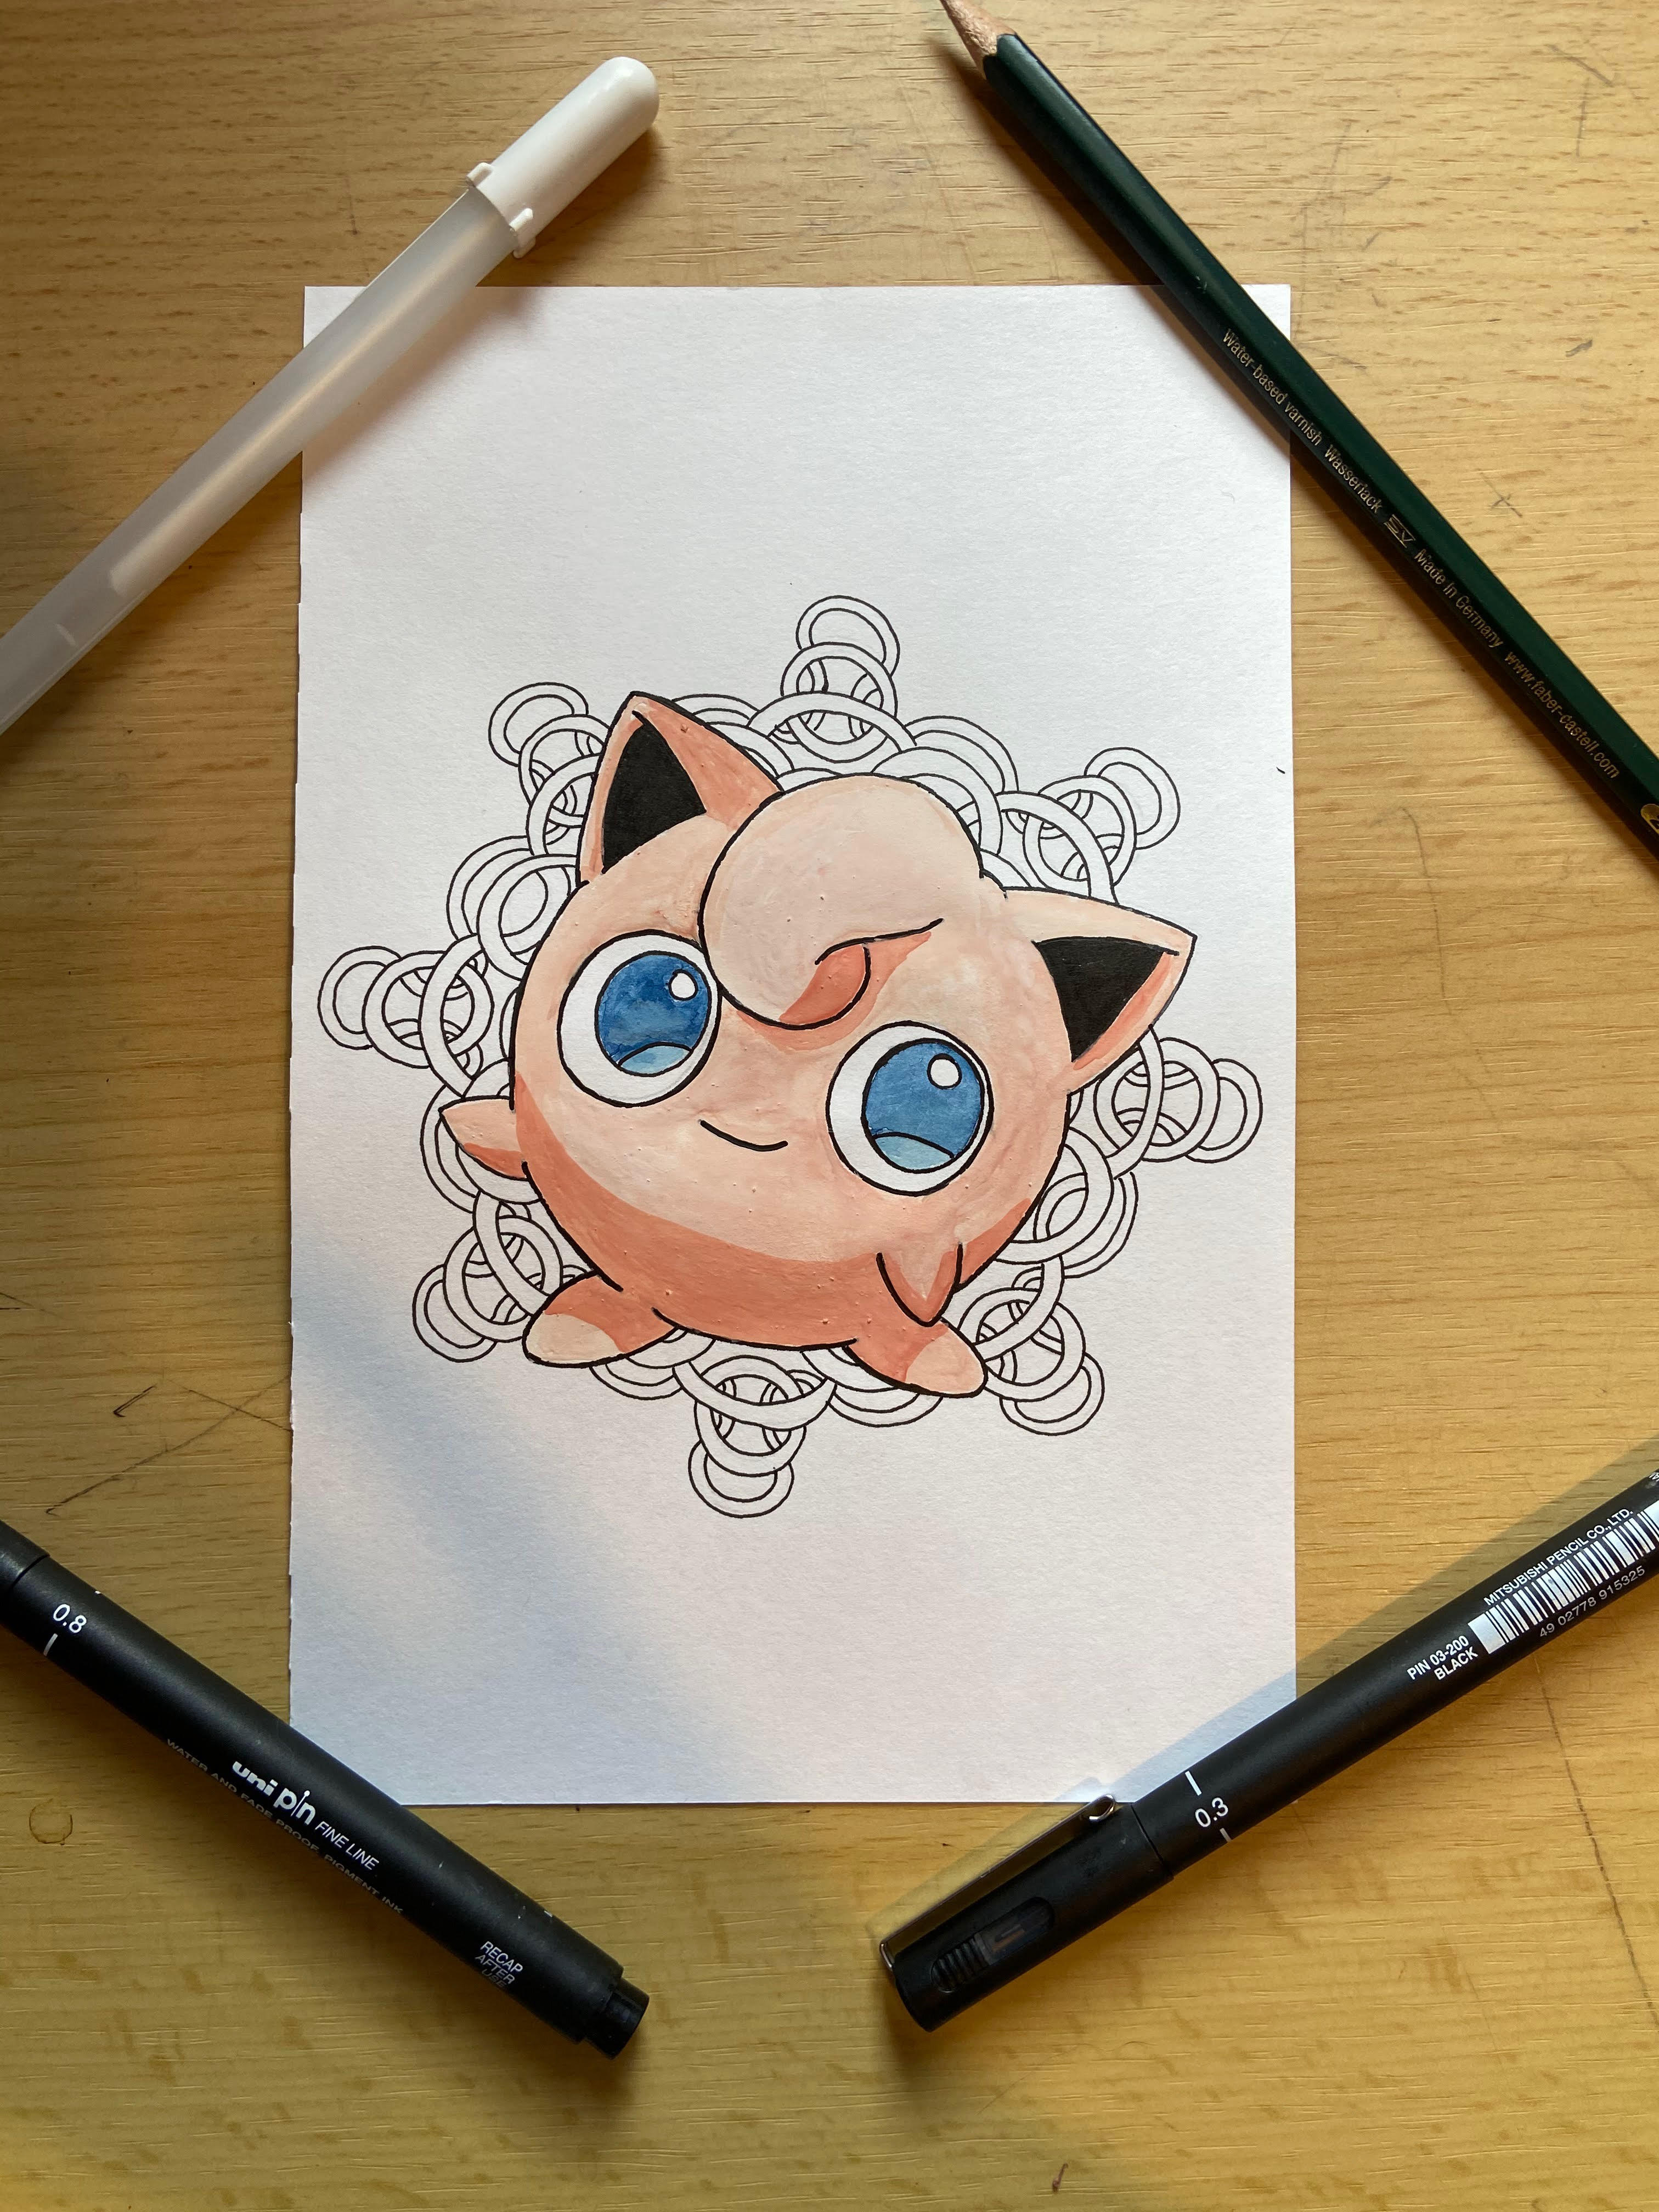 Watercolour painting of the Pokemon JigglyPuff